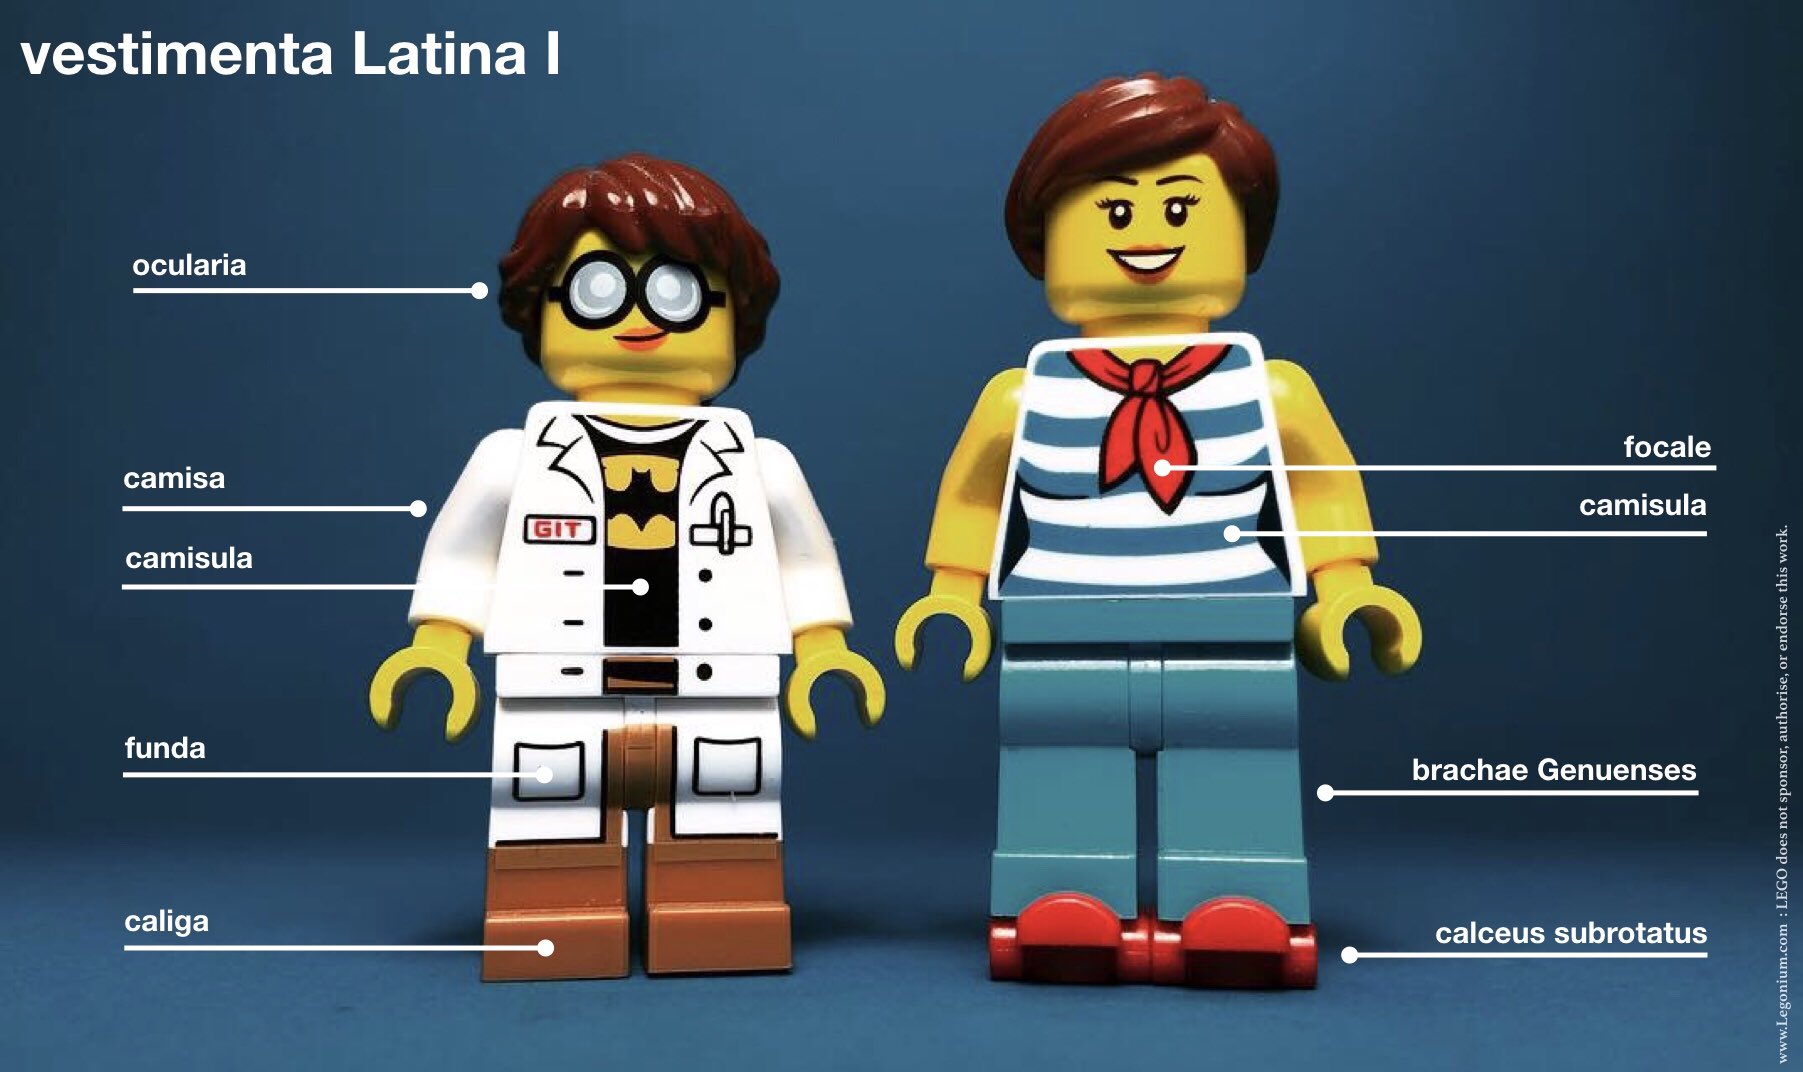 Legonium on Twitter: "vestimenta Latina : a few items of clothing, #Latin https://t.co/FJQ5phcPW2" / Twitter